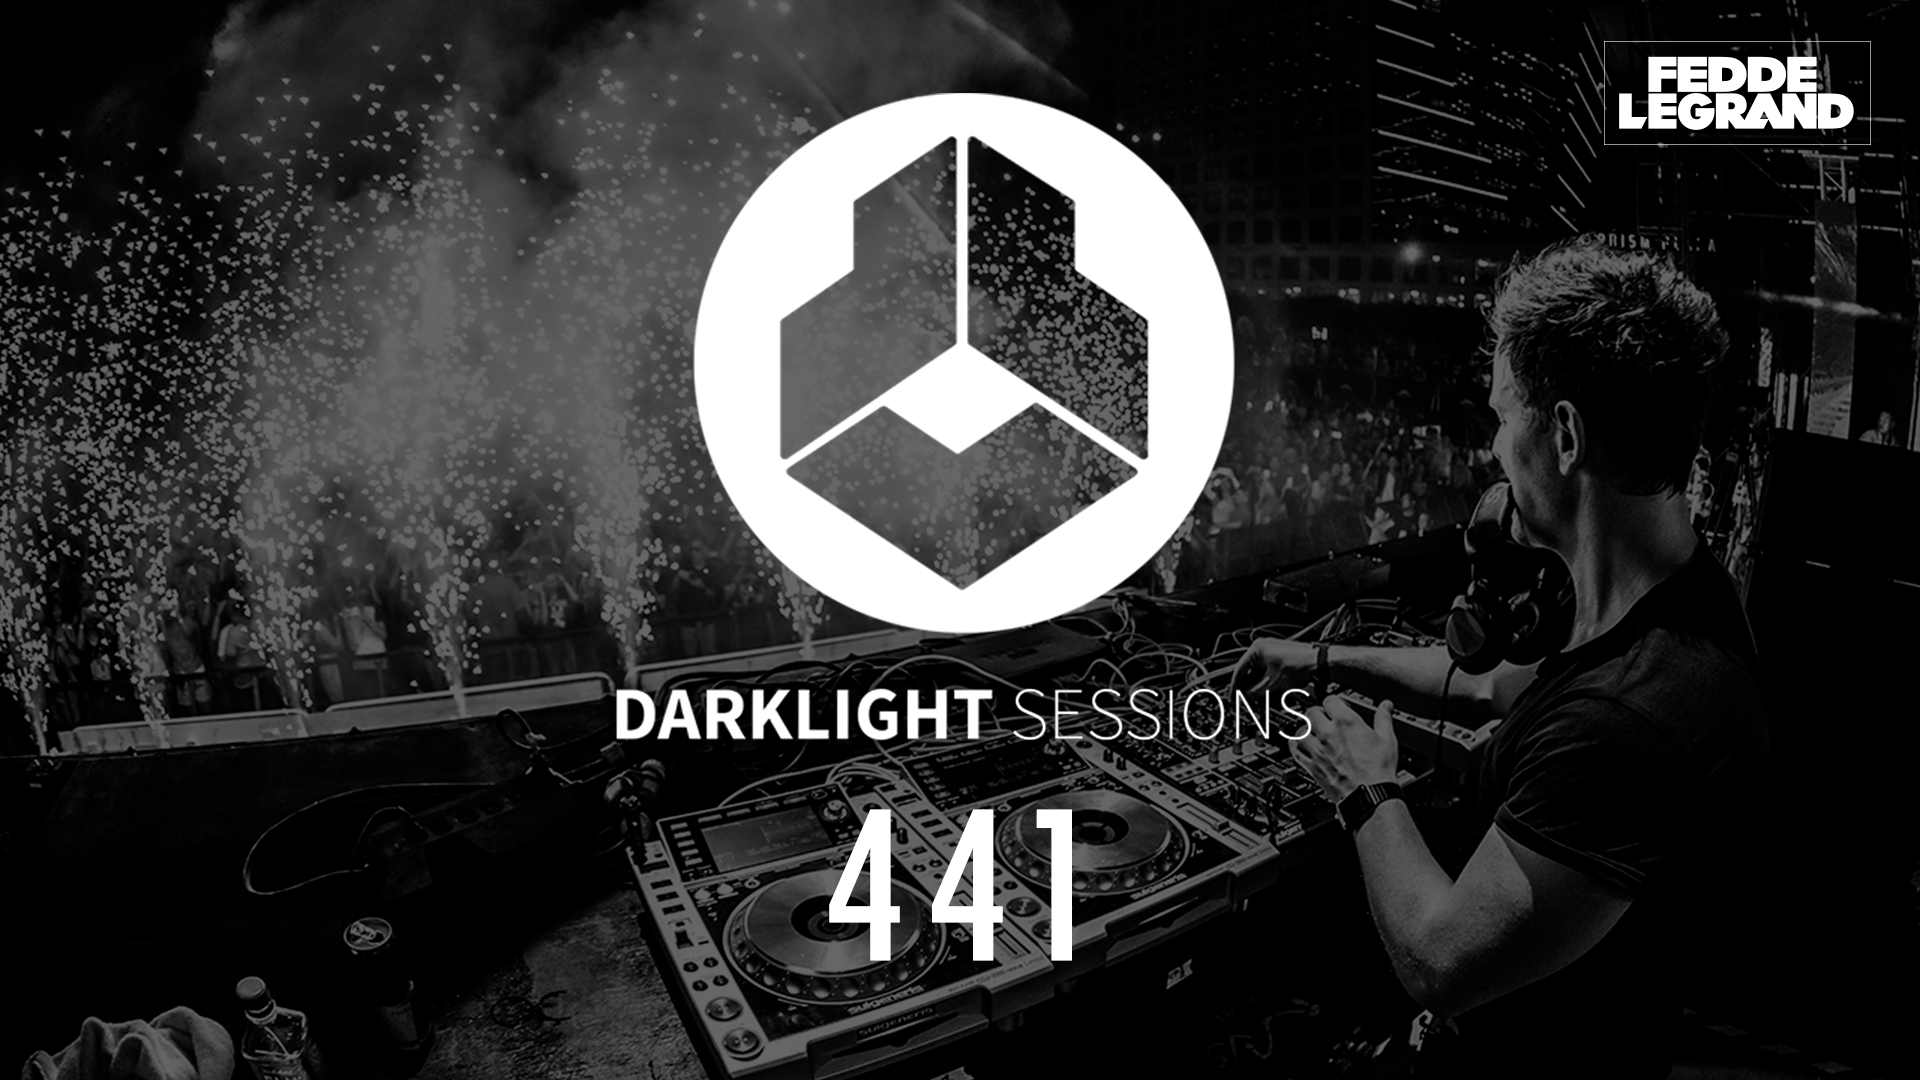 Darklight Sessions 441